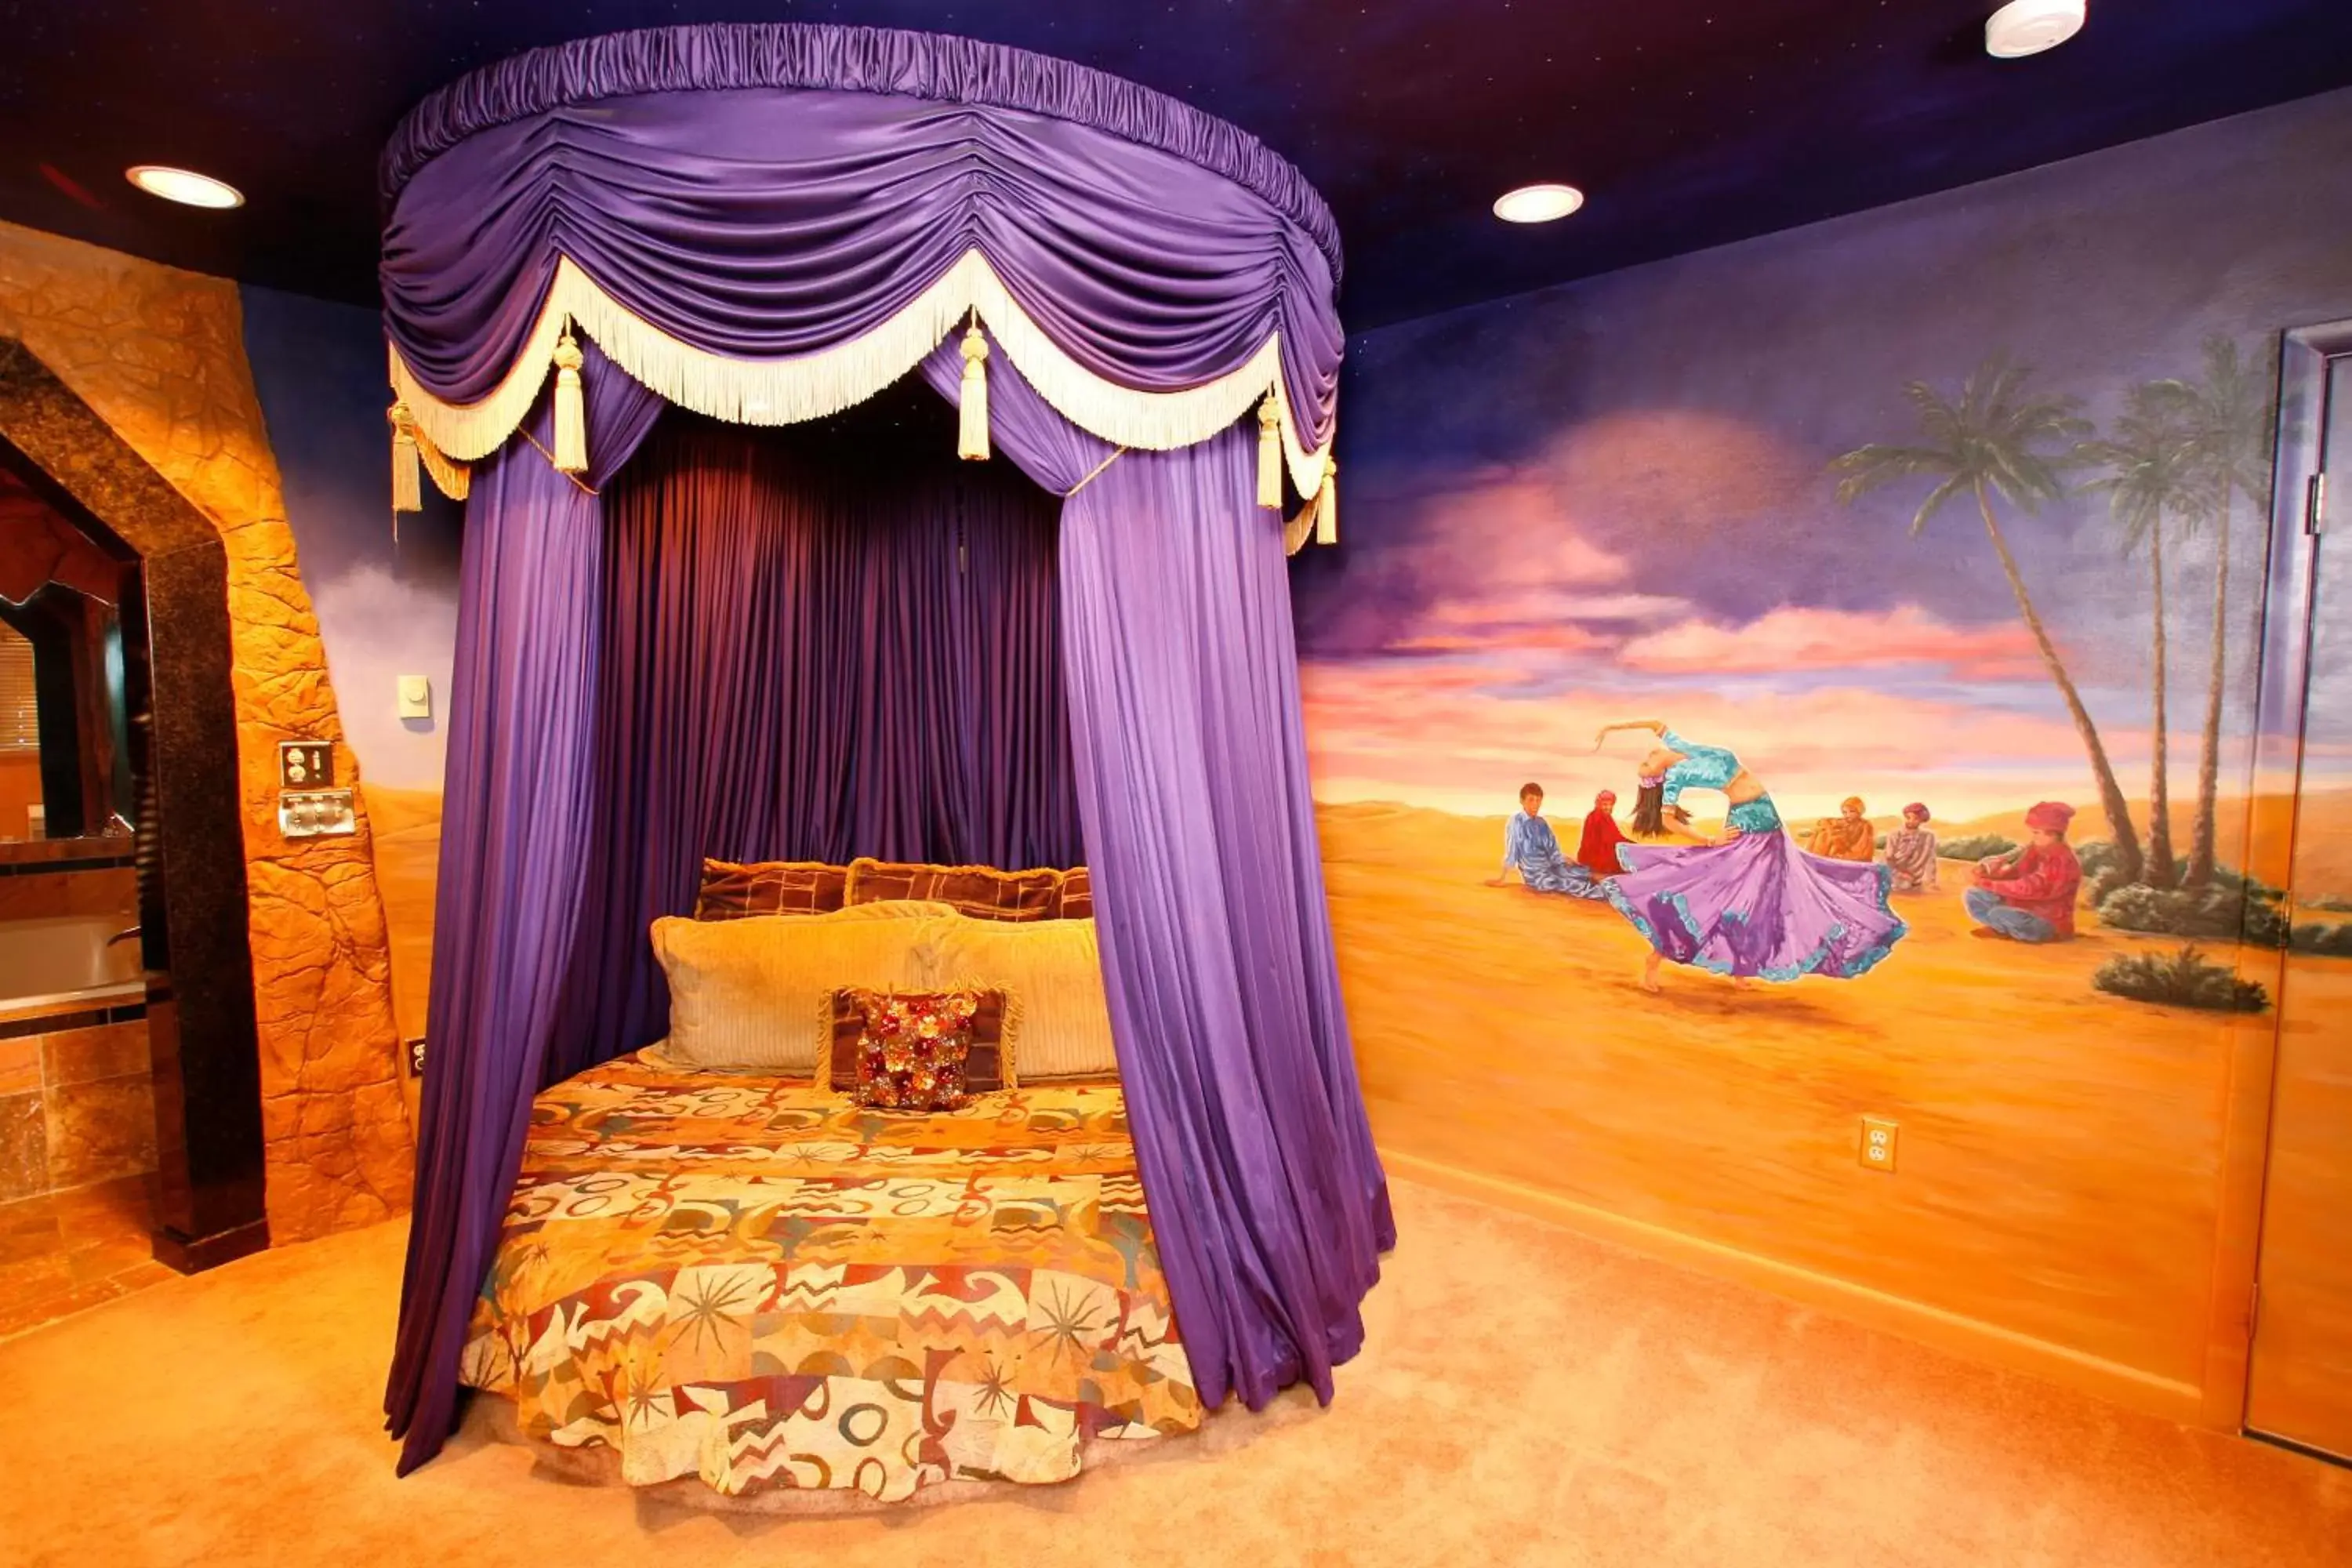 King Room - Arabian Nights Theme in Black Swan Inn Luxurious Theme Rooms